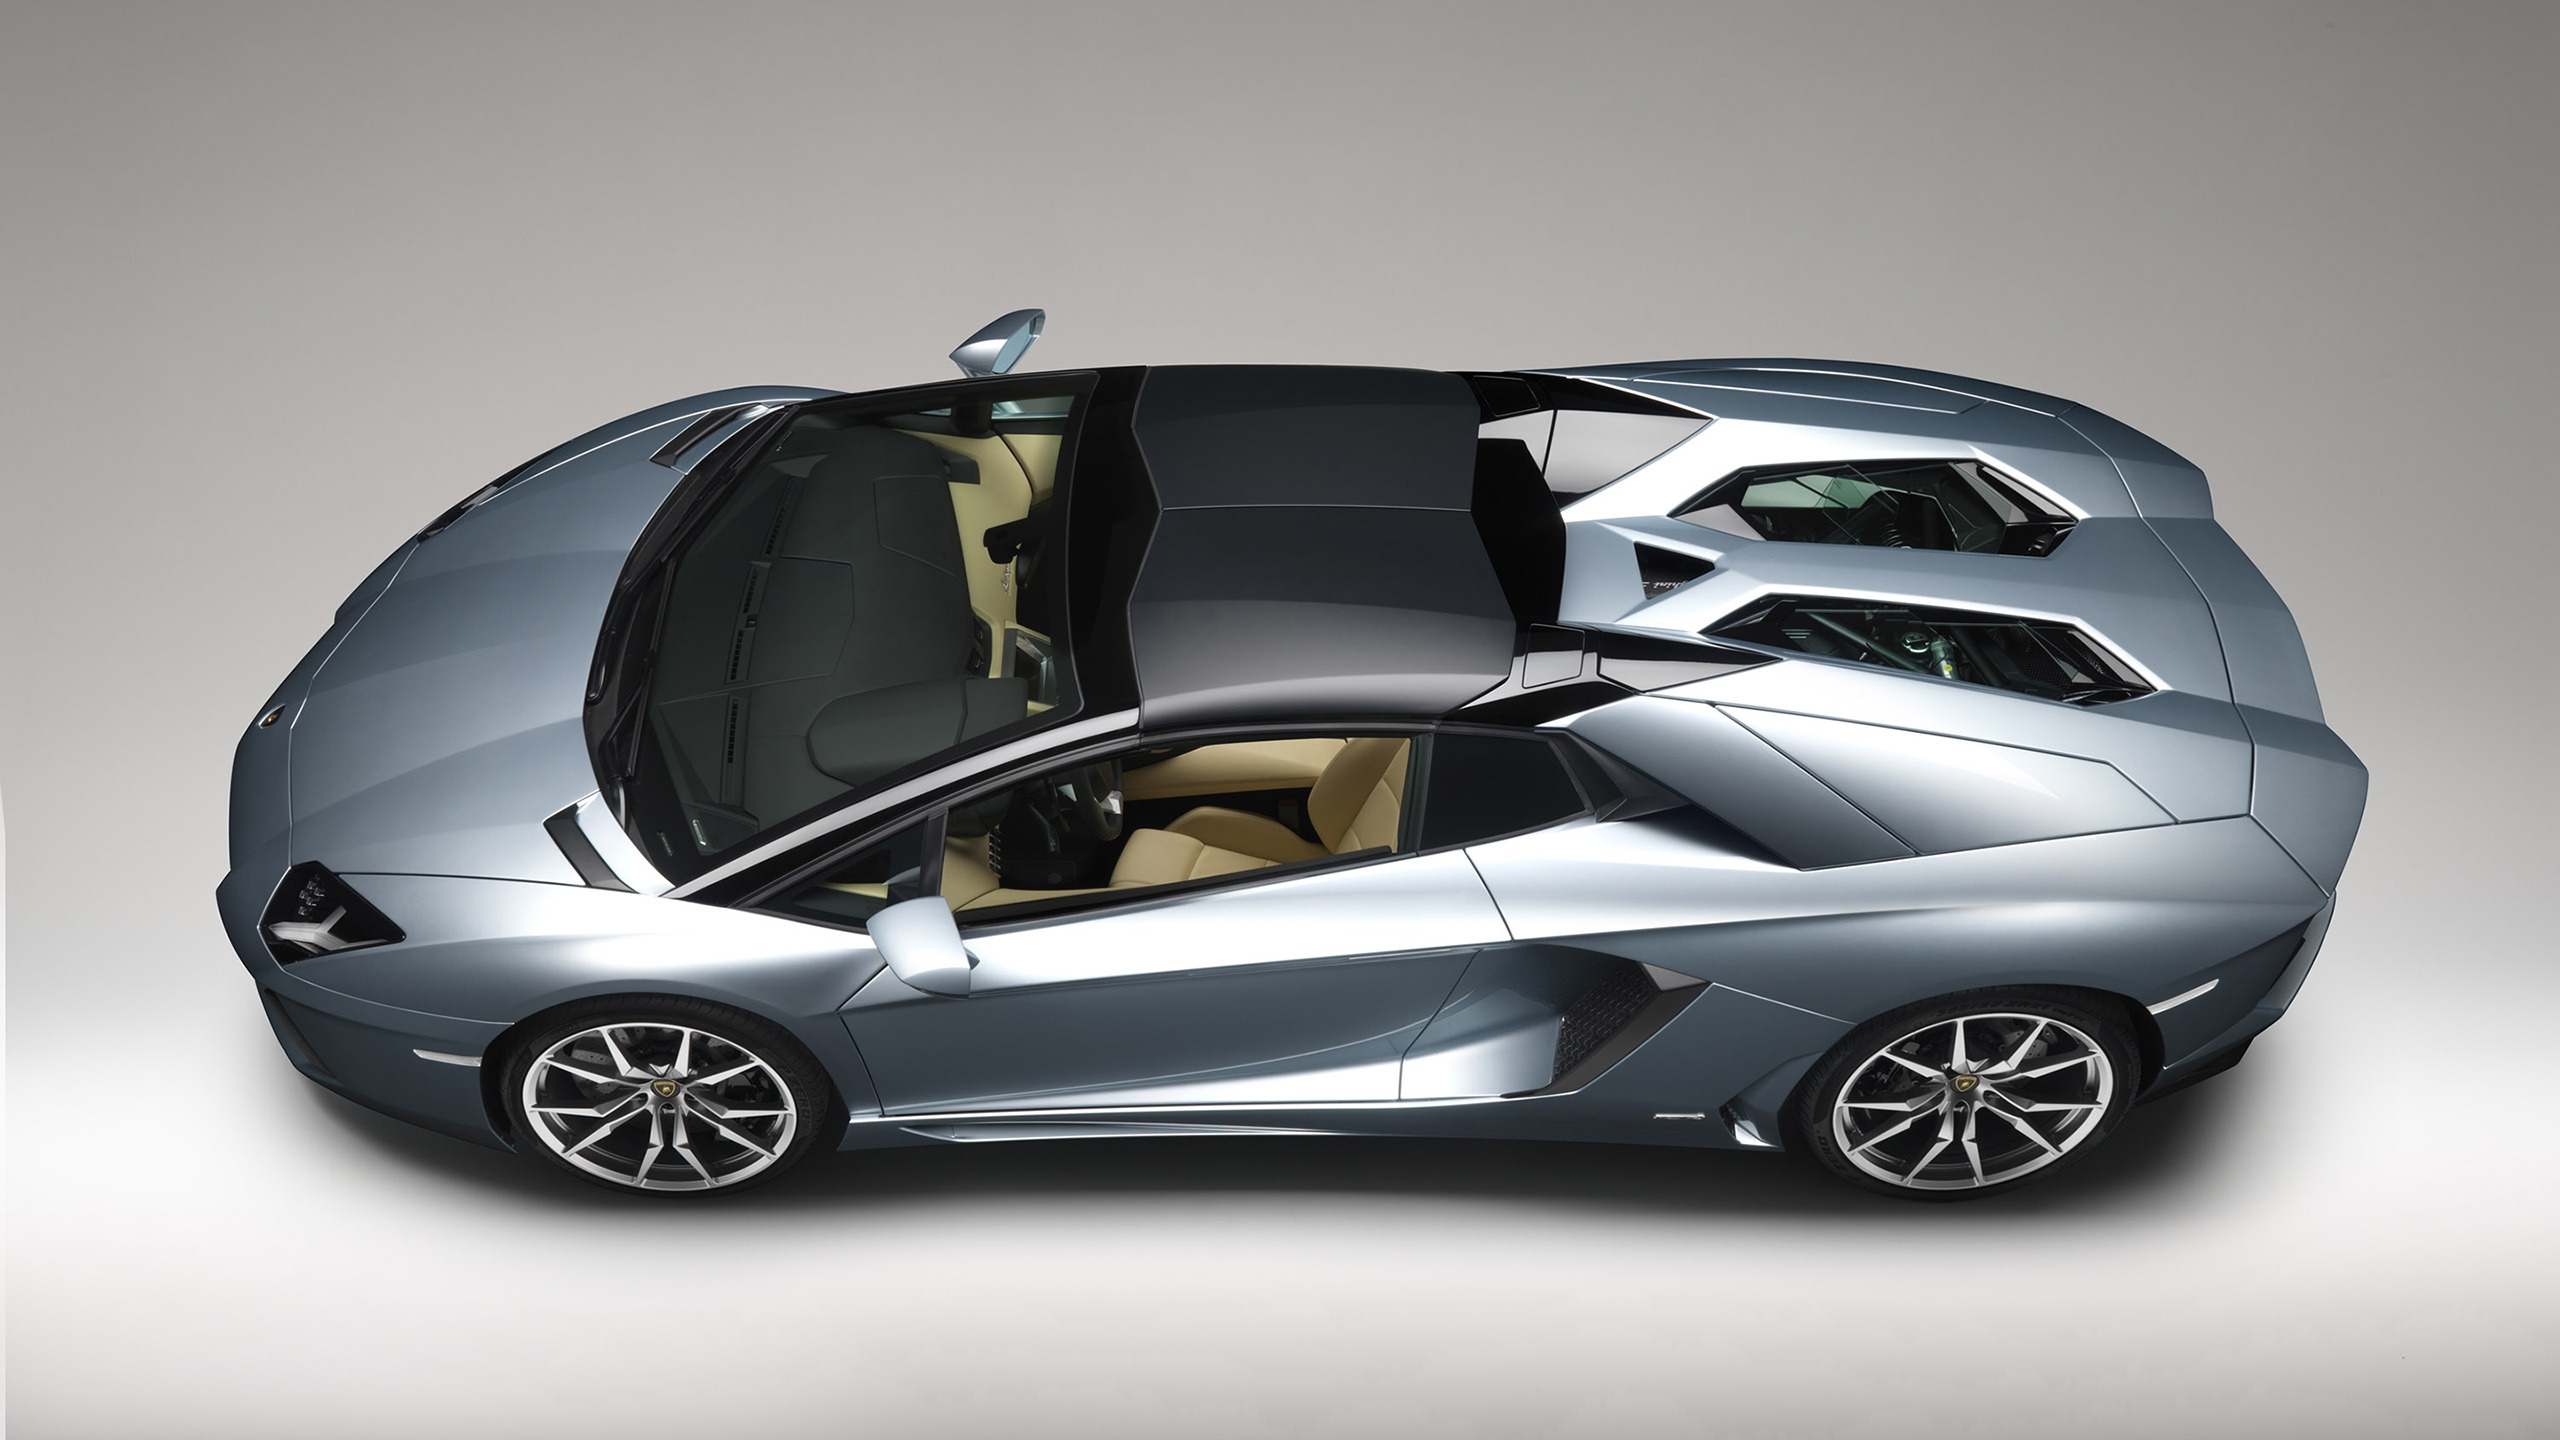 Lamborghini Aventador LP 700 Studio for 2560x1440 HDTV resolution